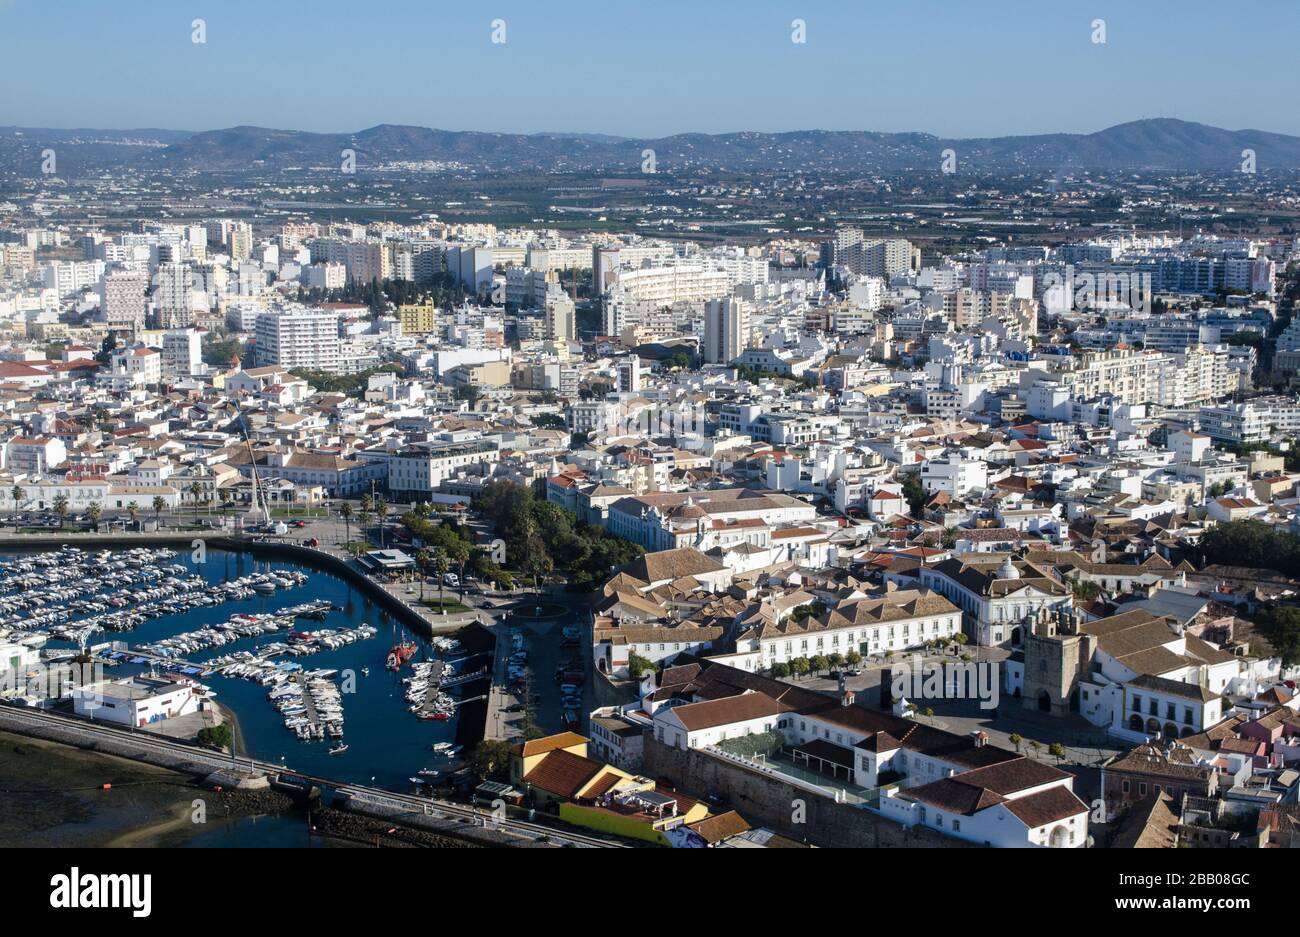 Aerial view of the historic centre of the city of Faro on the Algarve coast of Portugal.  Igreja de Santa Maria, Ginasio Clube Naval, Nucleo Museologi Stock Photo